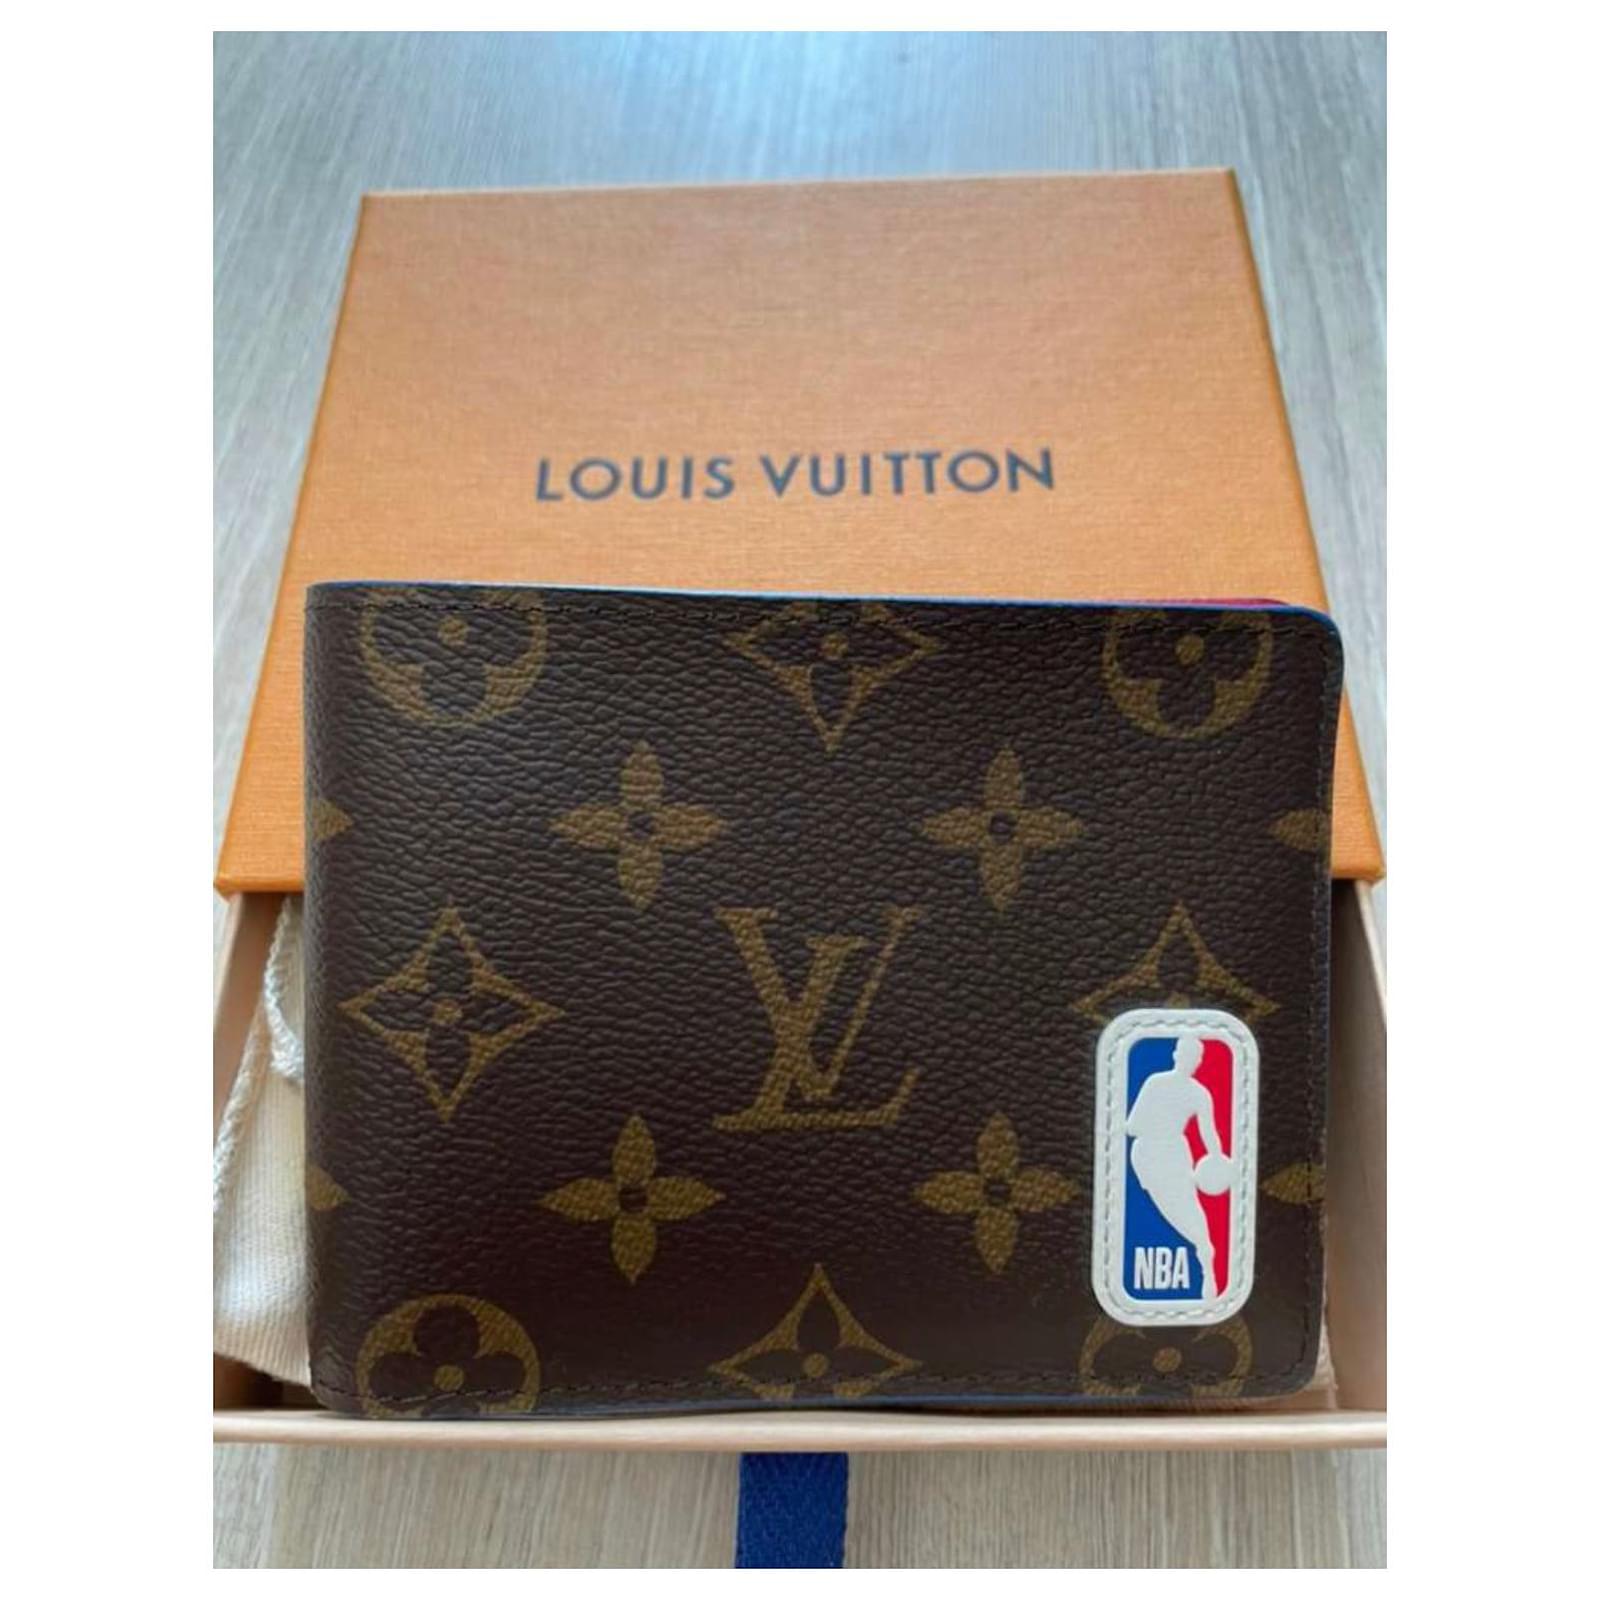 Louis Vuitton X Nba Wallet Case